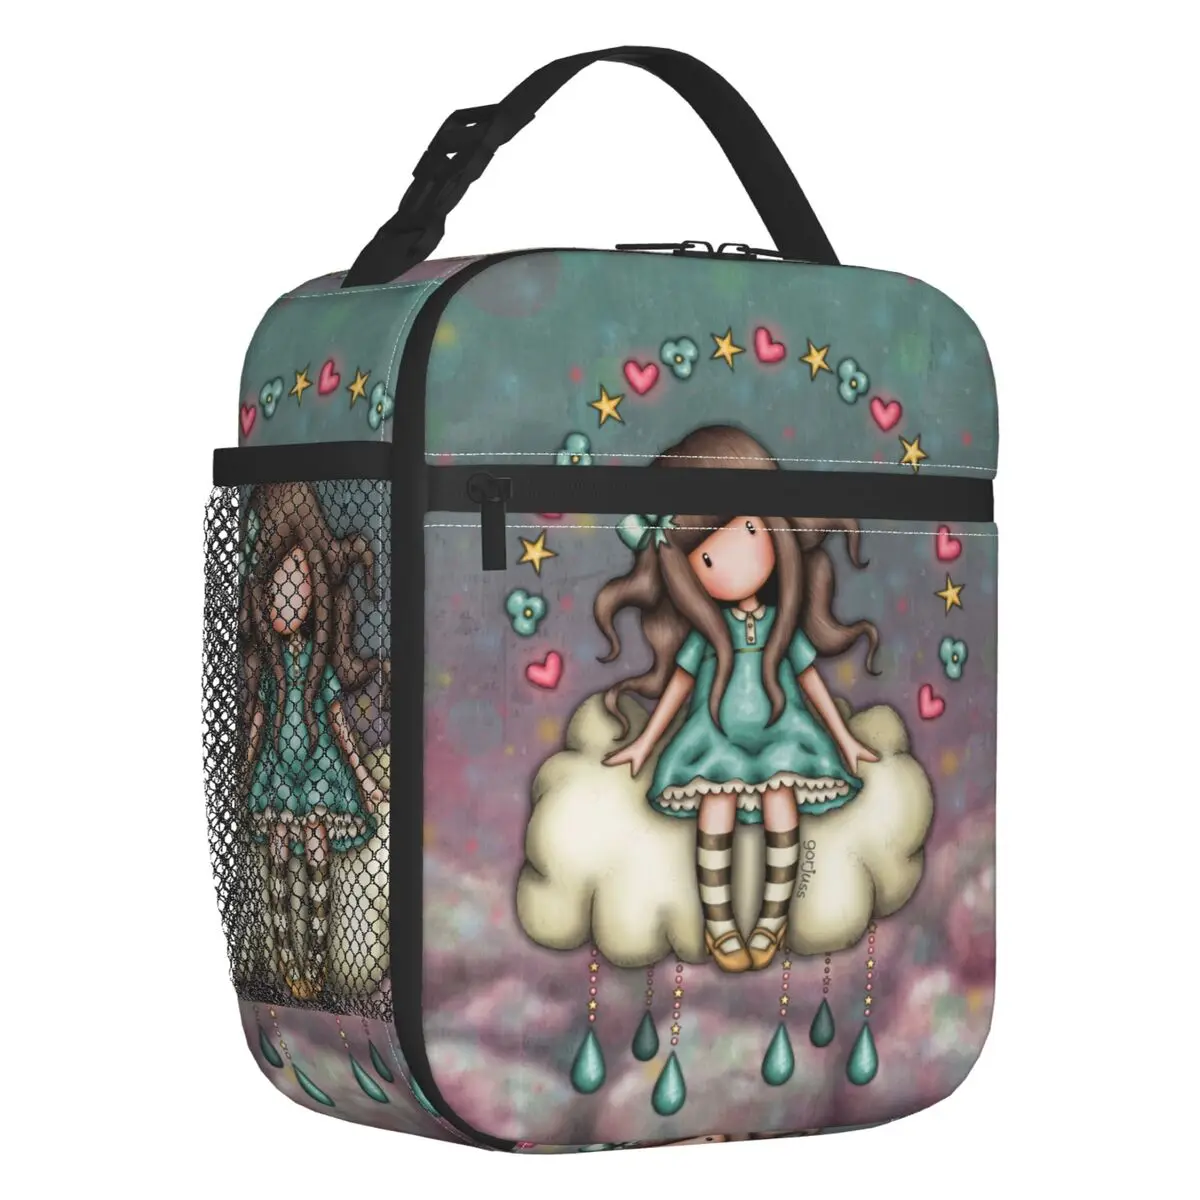 Santoro Gorjuss Insulated Lunch Bags for Women Portable Cooler Thermal Bento Box Work School Travel